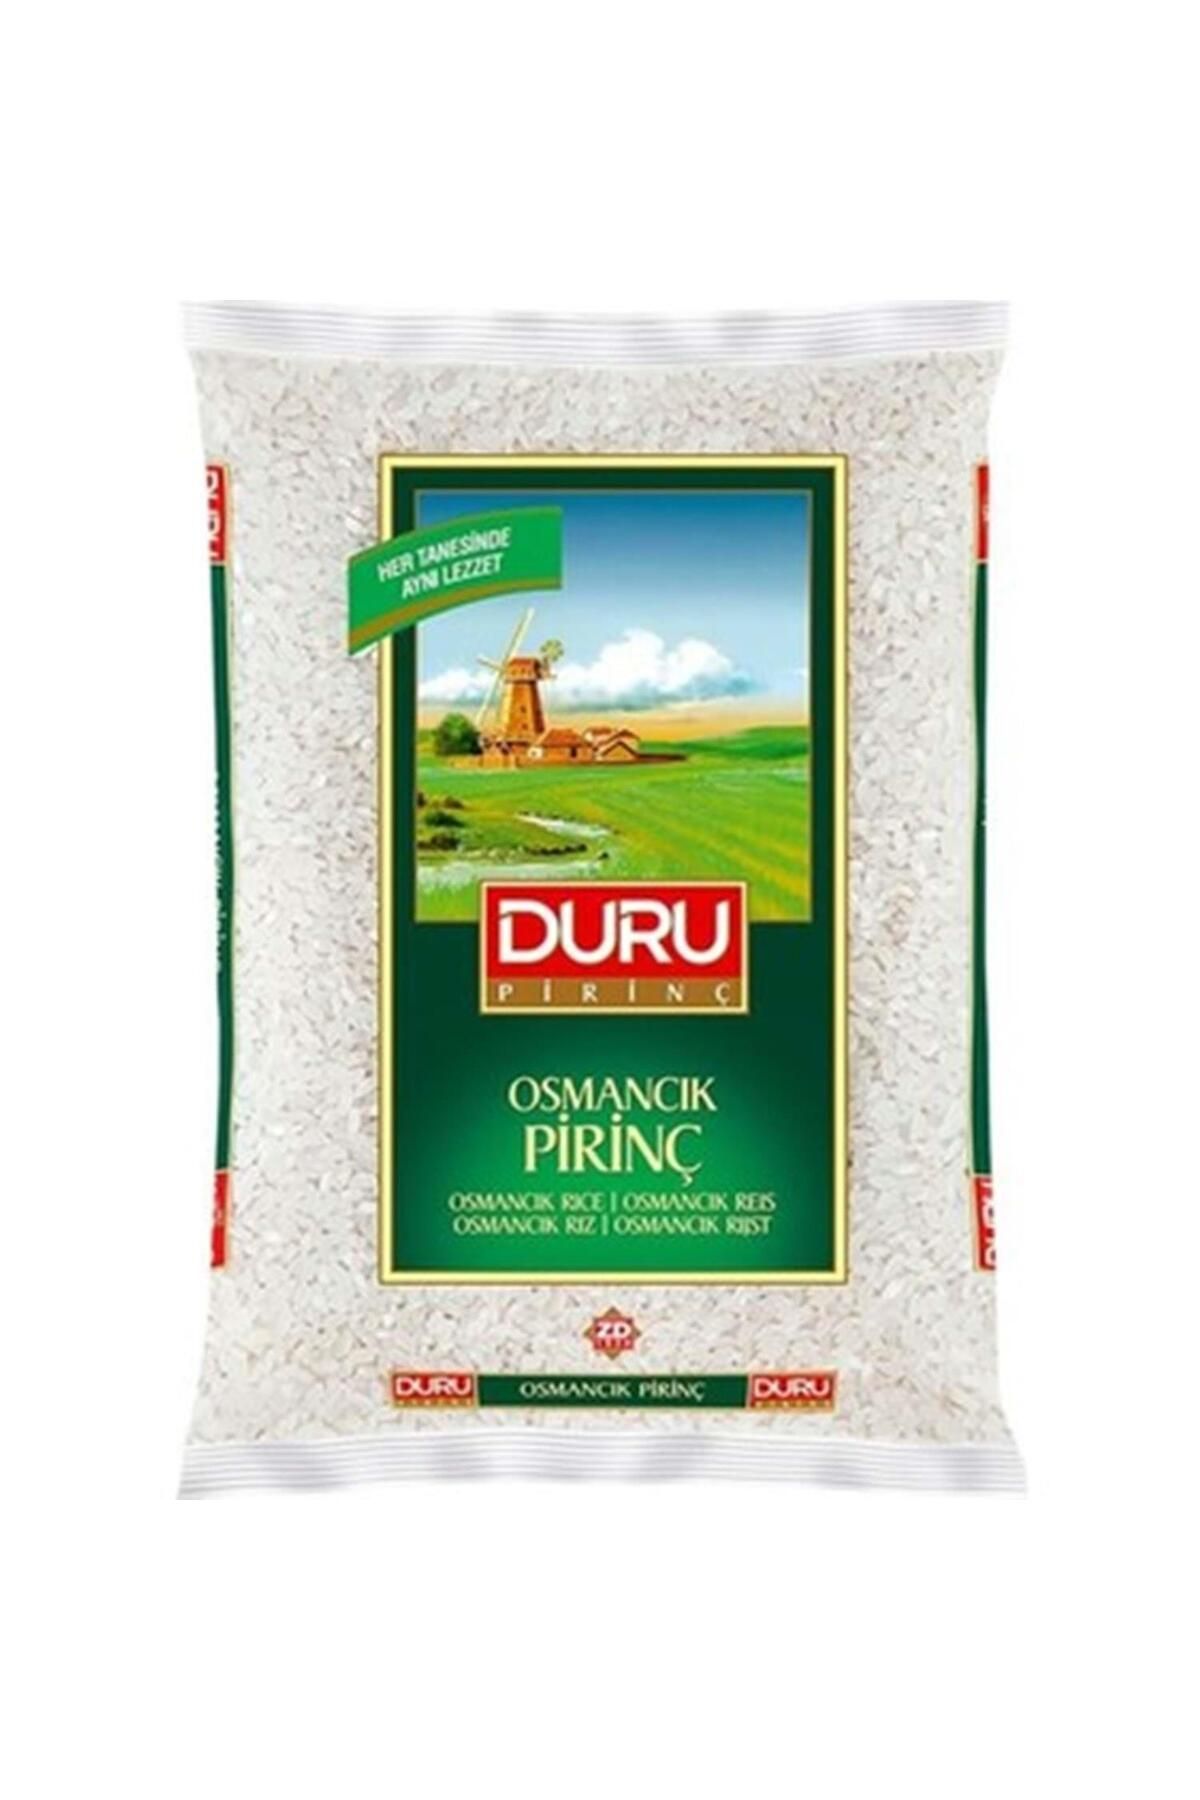 Duru Osmancık Pirinç 2000 Gr. (2'Lİ)